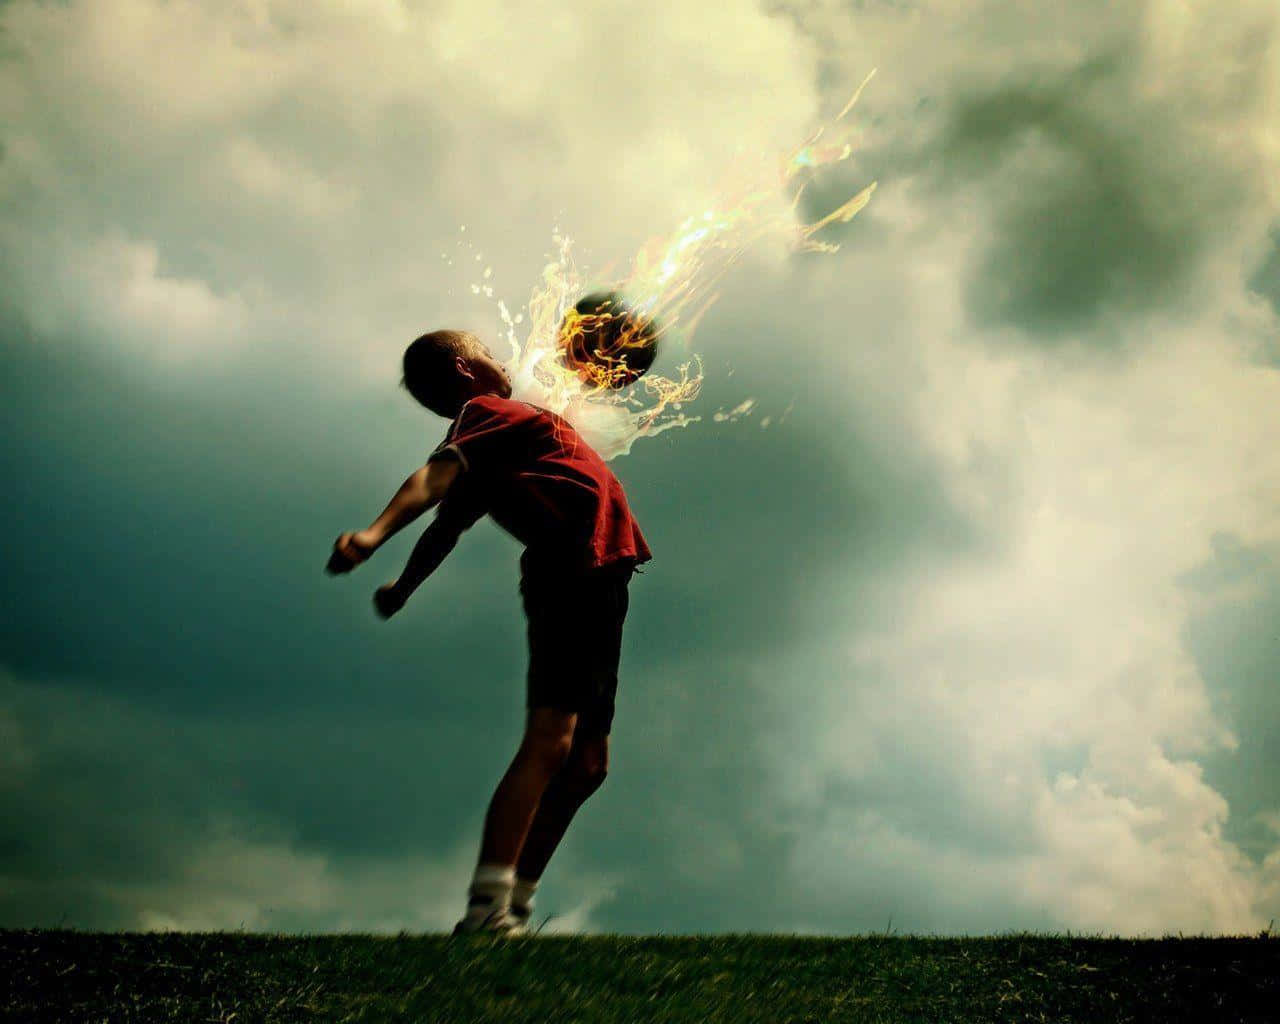 A Boy Catches A Fireball In The Air